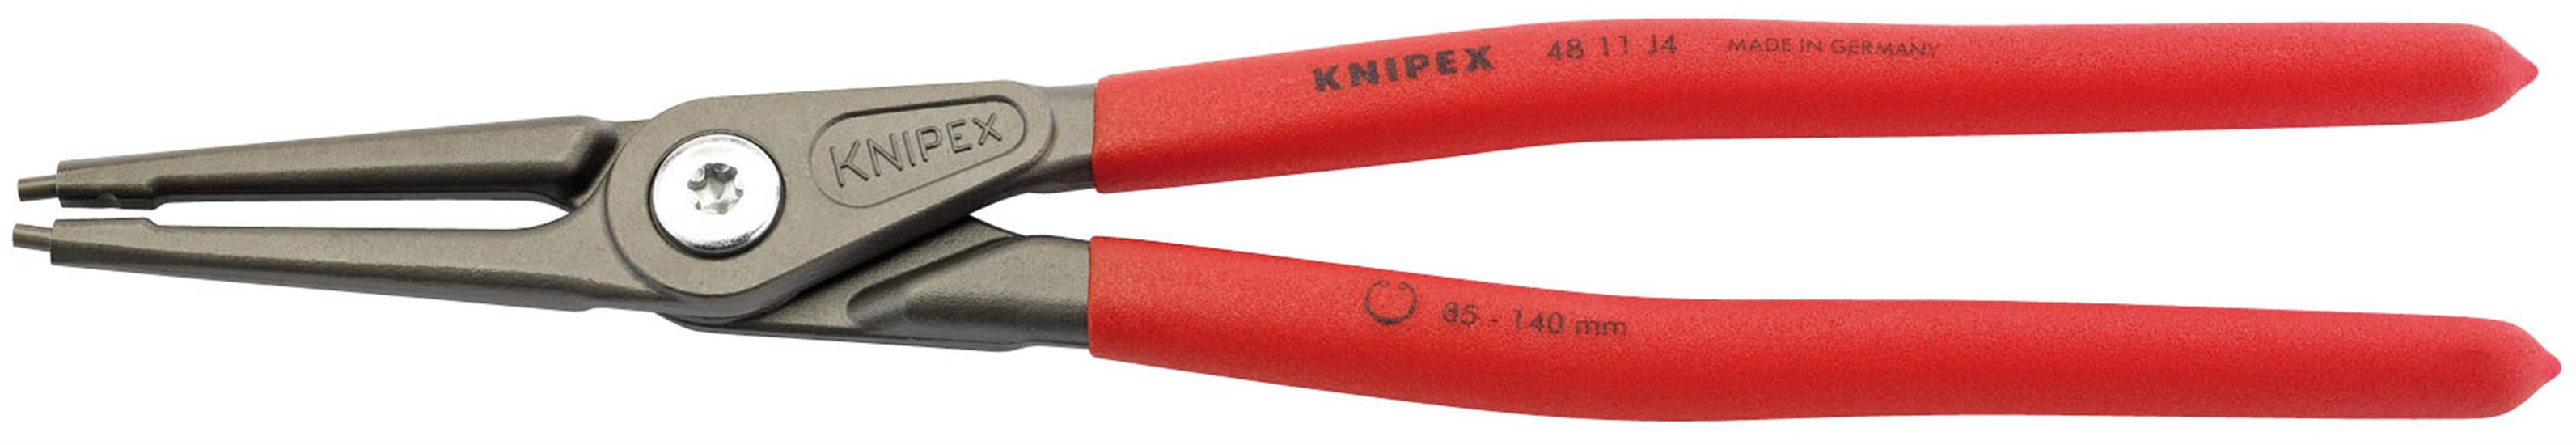 Draper 75081 ⡈ 11 J4) - Knipex 48 11 J4 320mm Internal Straight Tip Circlip Pliers, 85 - 140mm Capacity